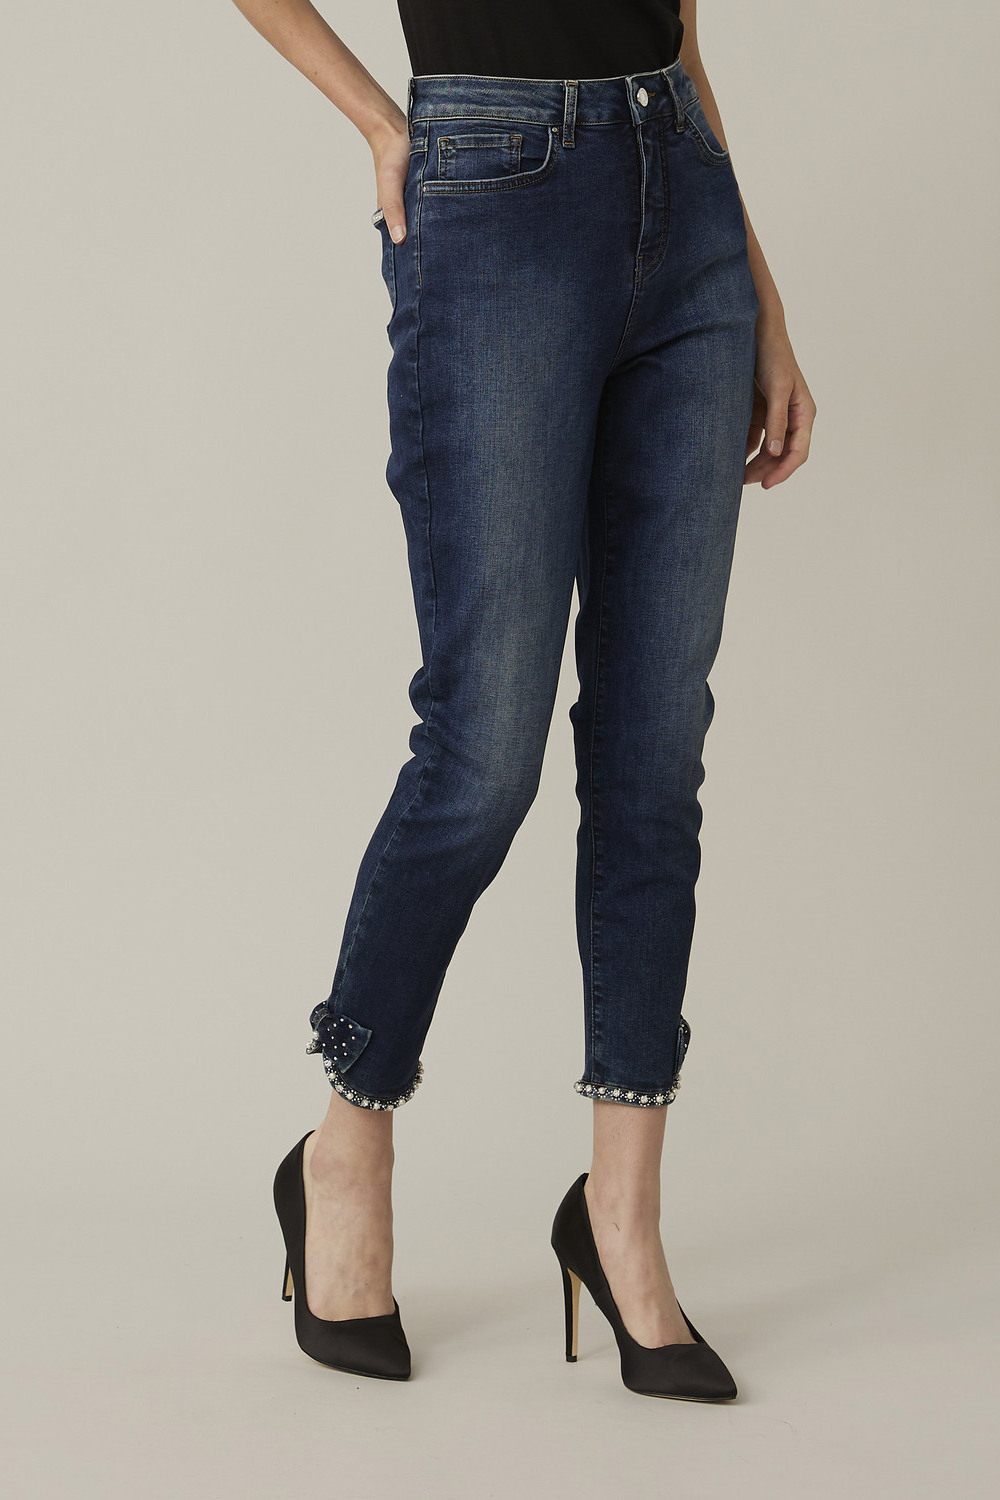 Joseph Ribkoff Bow Detail Jeans Style 221937. Dark Denim Blue